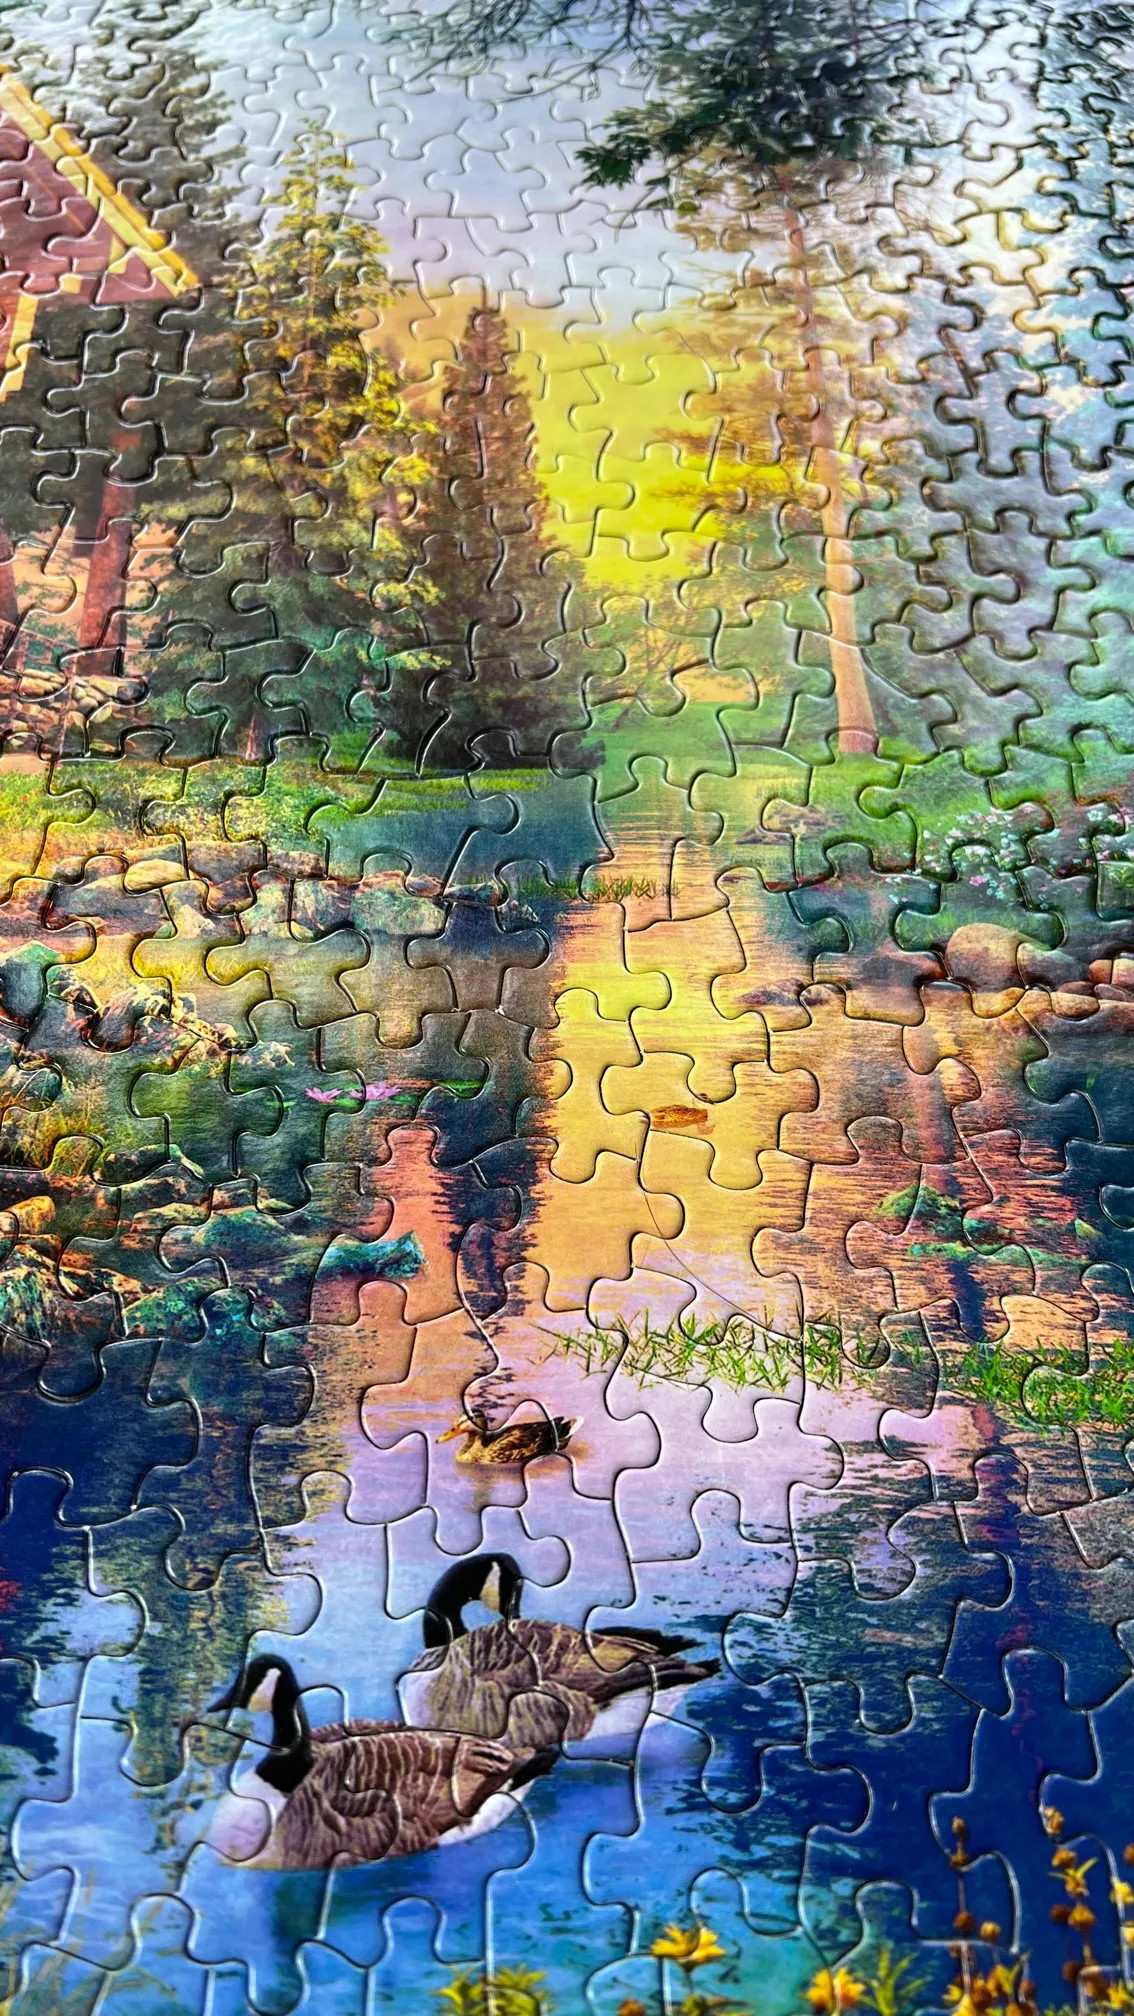 Log House Retreat 1000 Piece Jigsaw Puzzle